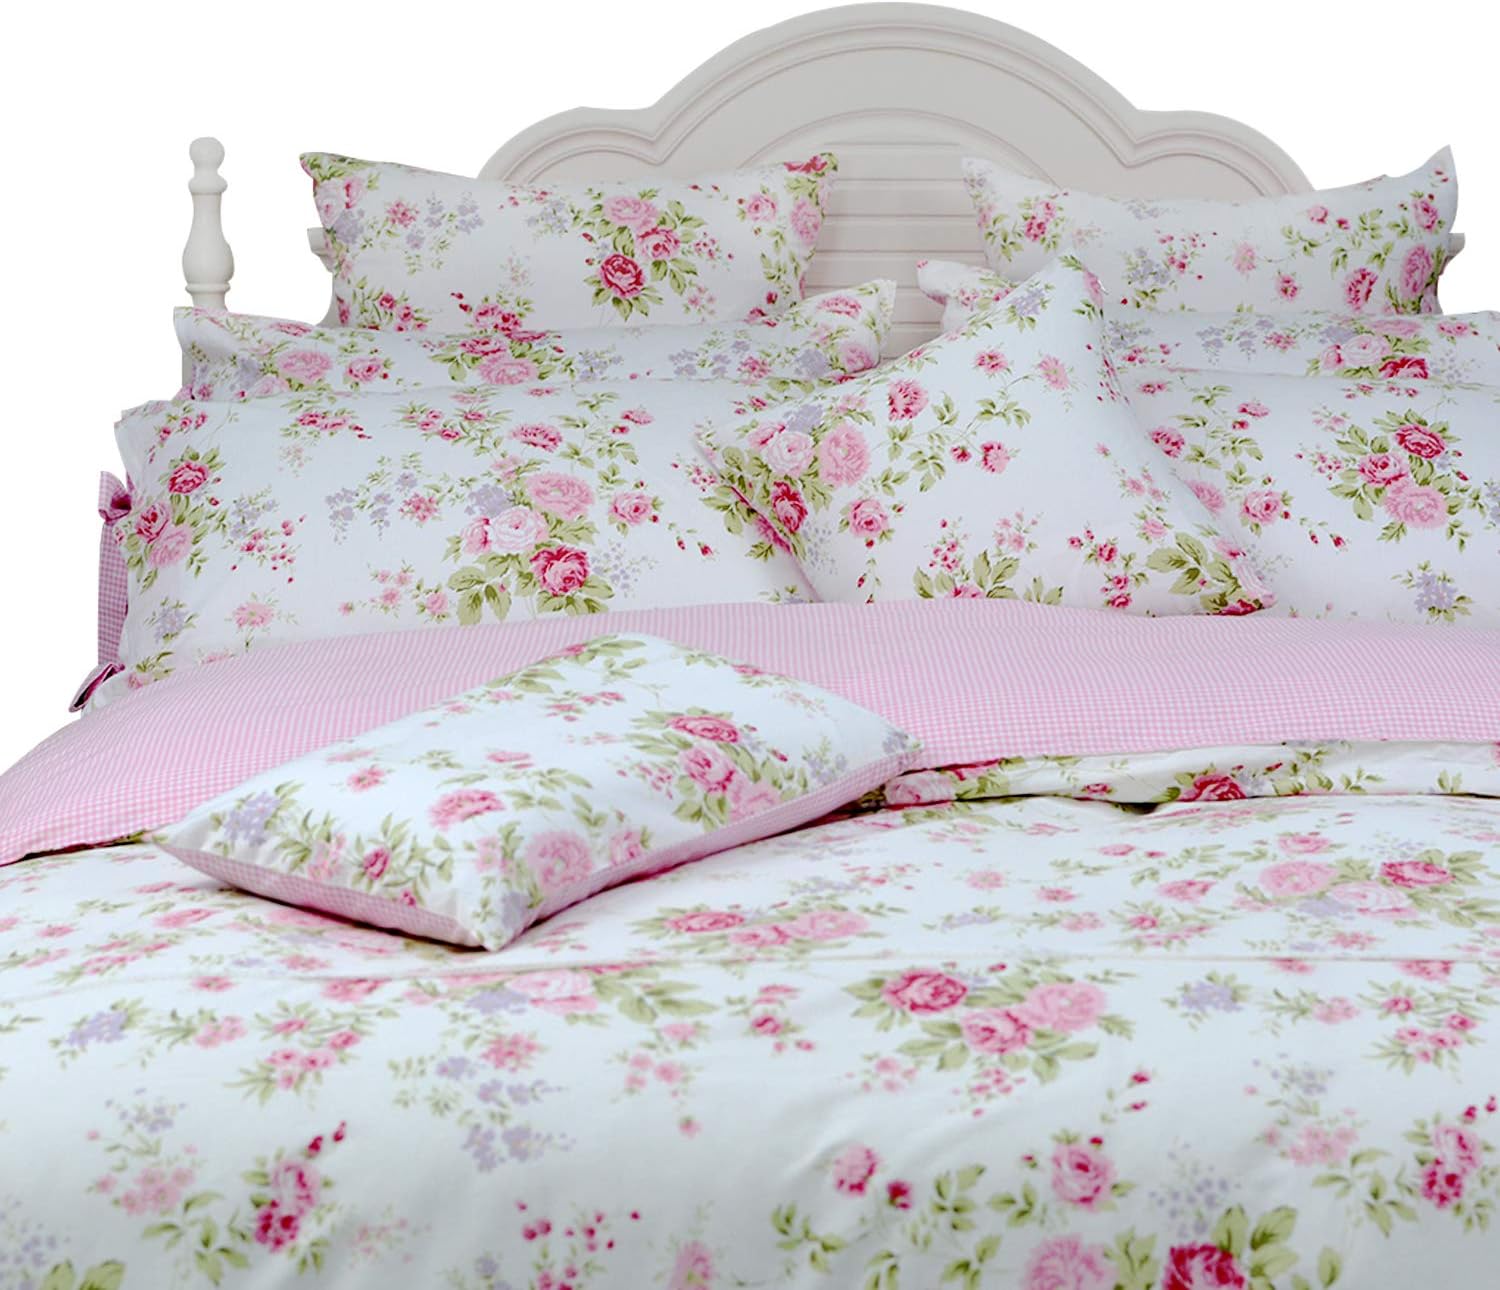 FADFAY Rose Floral Duvet Cover Set Pink Grid Cotton Girls Bedding with Hidden Zipper Closure 3 Pieces, 1duvet Cover & 2pillowcases,Queen Size